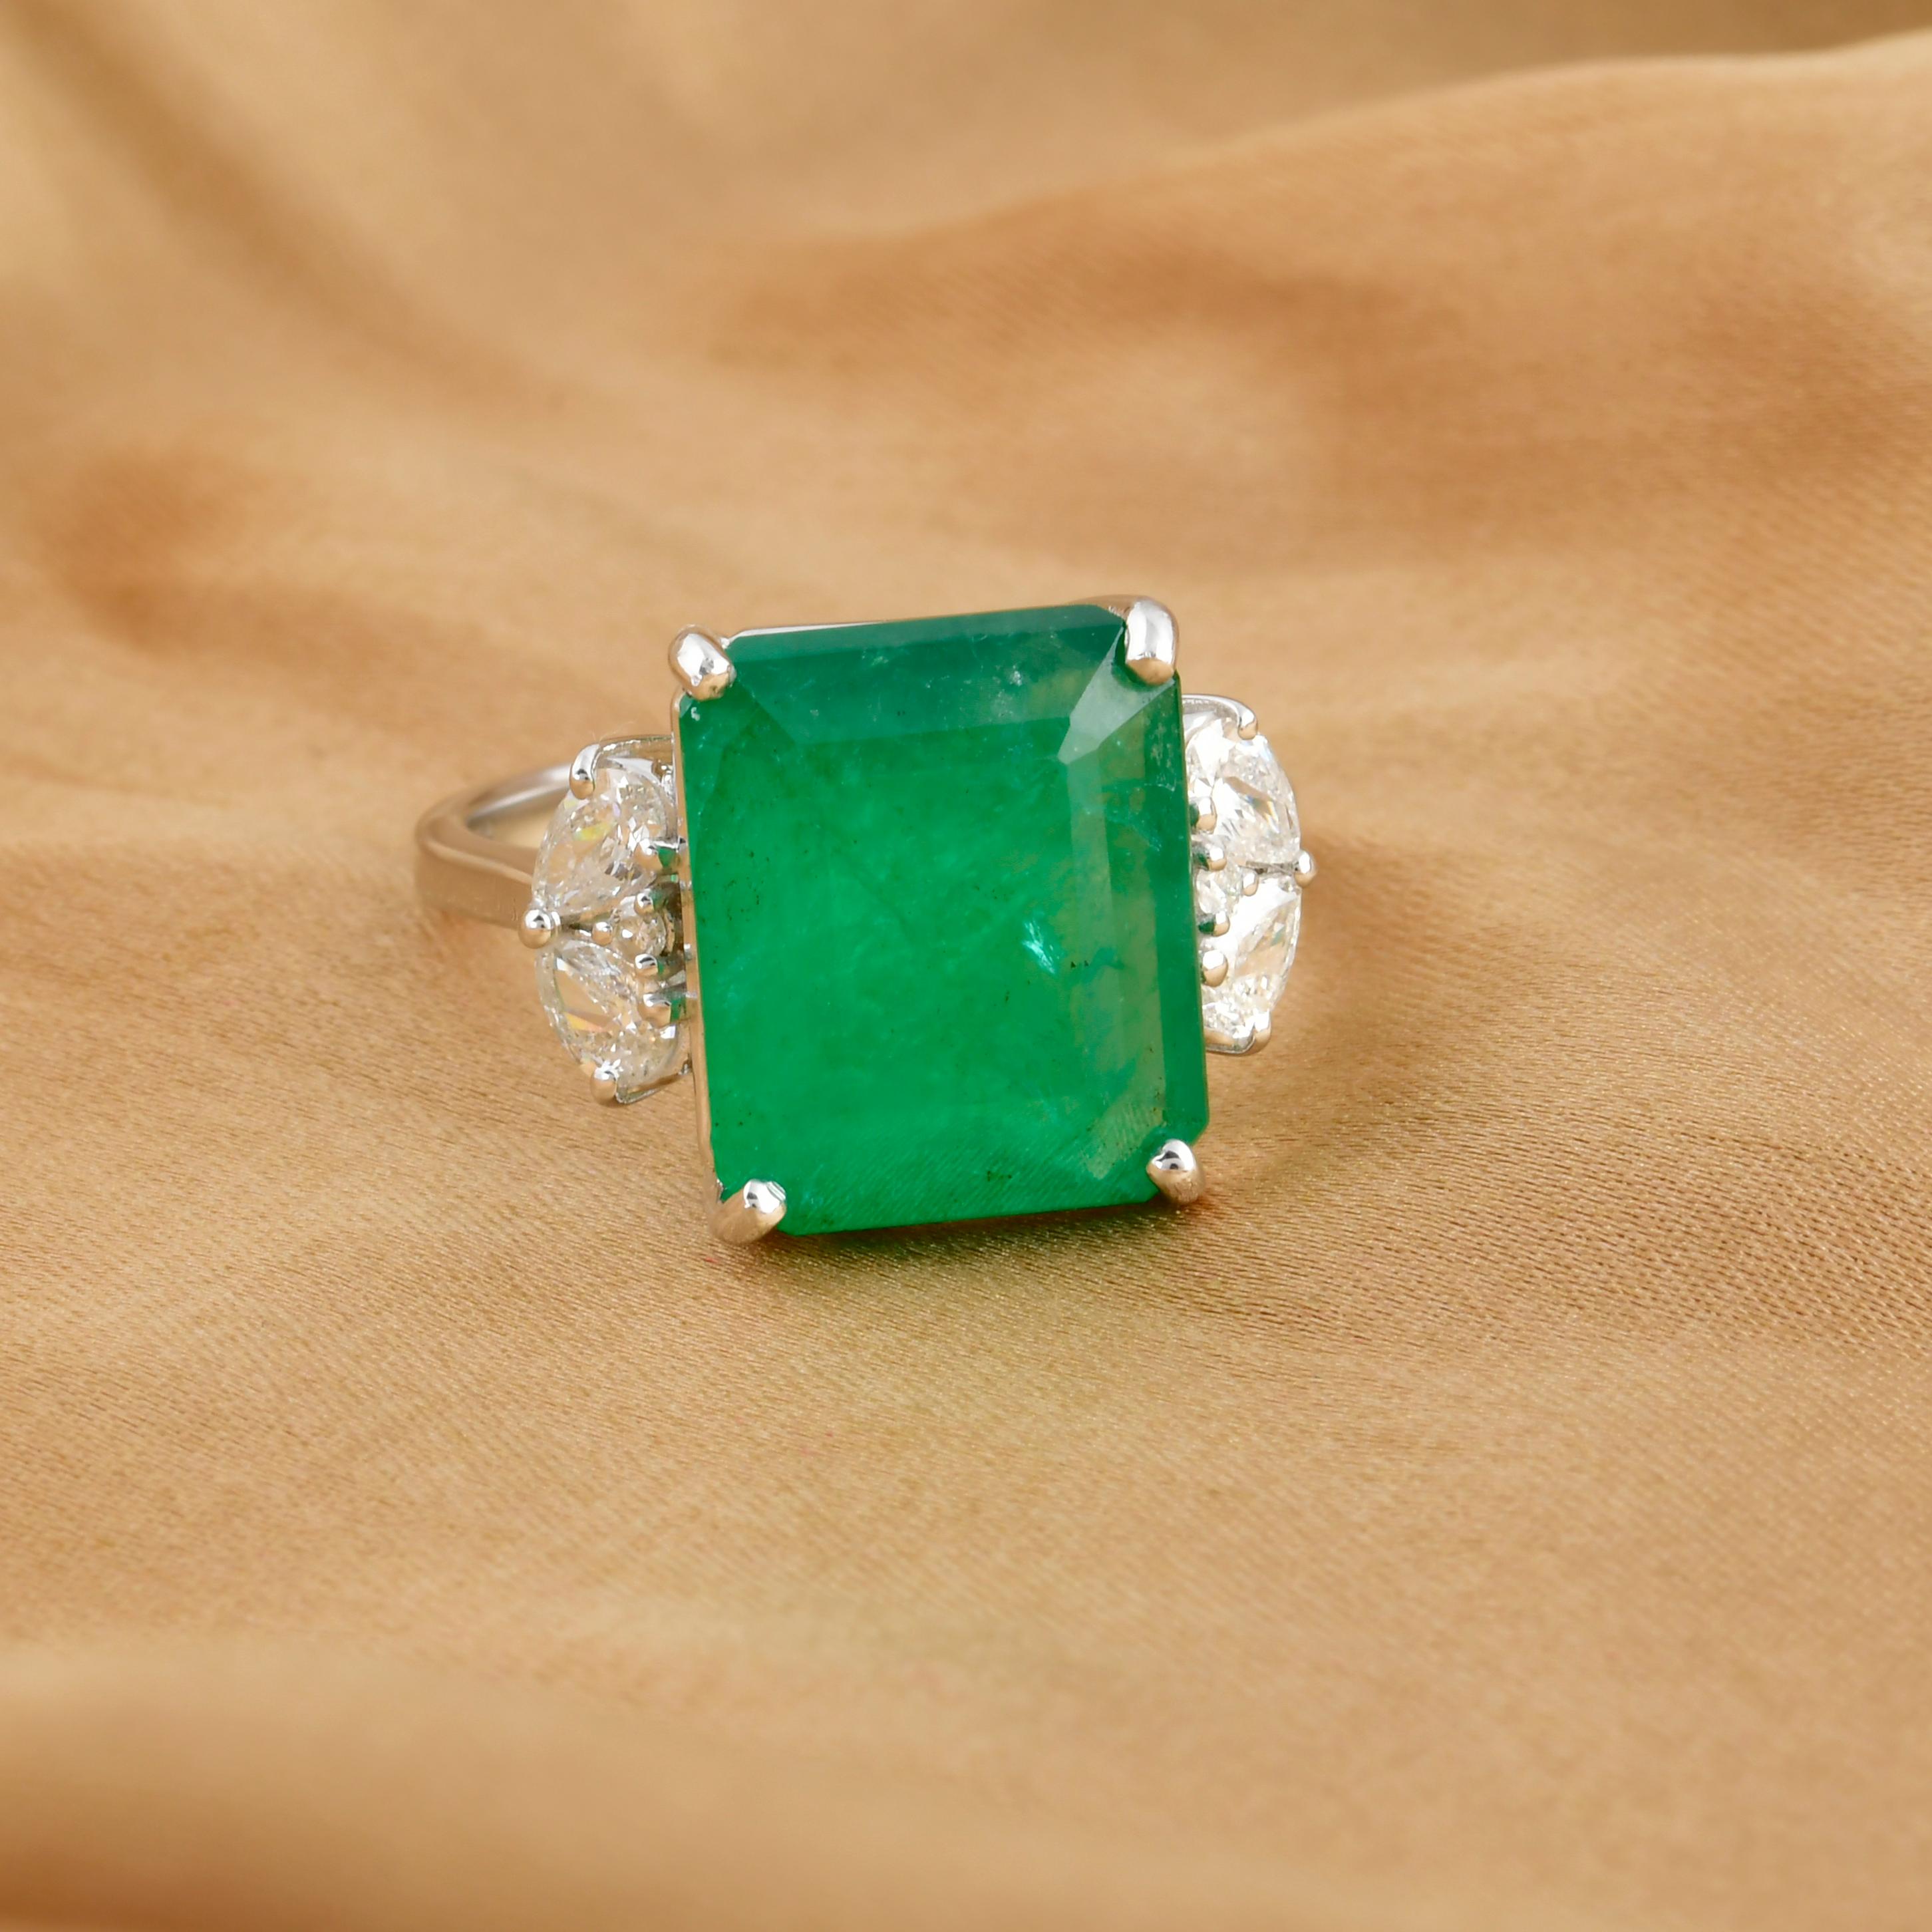 Emerald Cut Zambian Emerald Gemstone Cocktail Ring Diamond 18k White Gold Handmade Jewelry For Sale